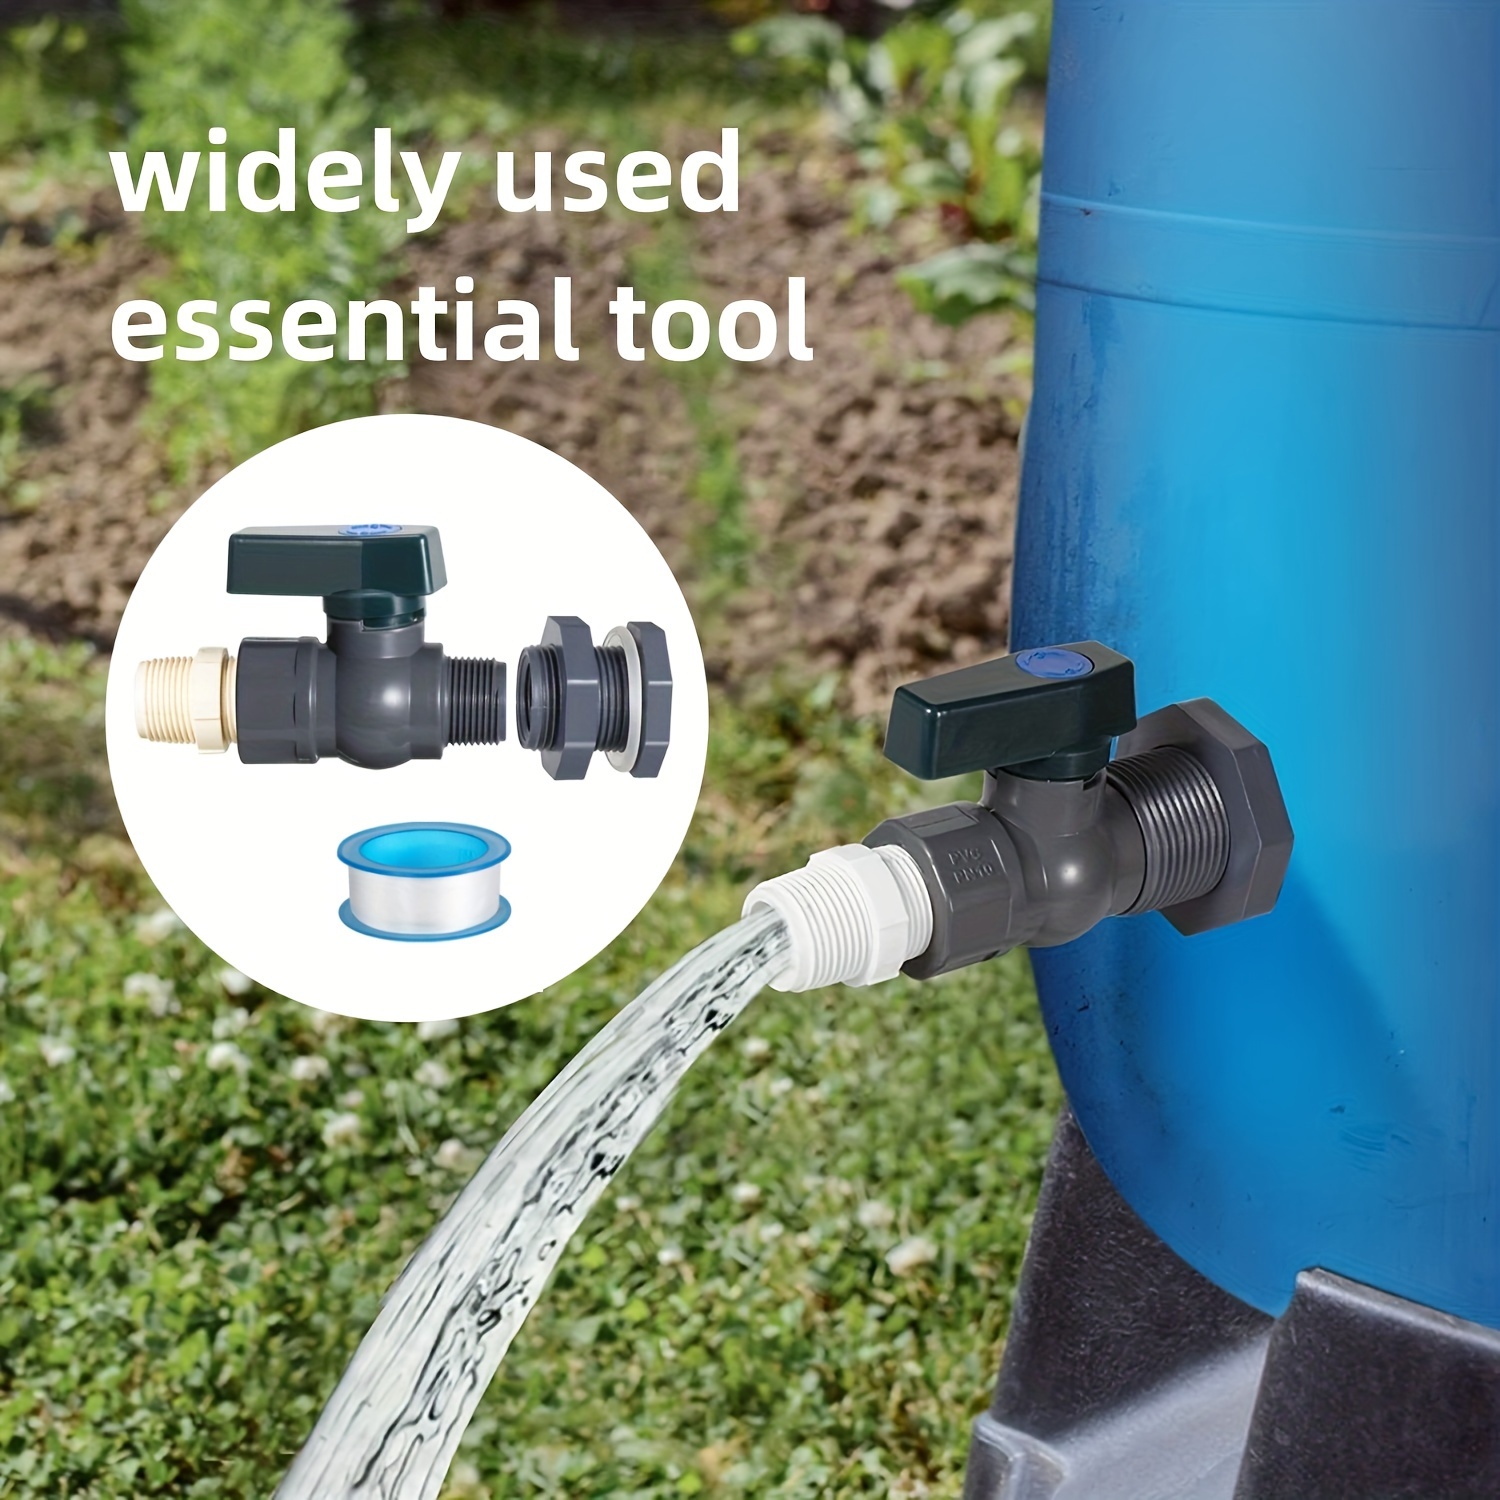 

2pcs/ Set, Pvc Water Barrel Spigot Kit, Connector Drain Adapter With Inner Connection For Garden, Rain Barre, Garden Tool Supplies